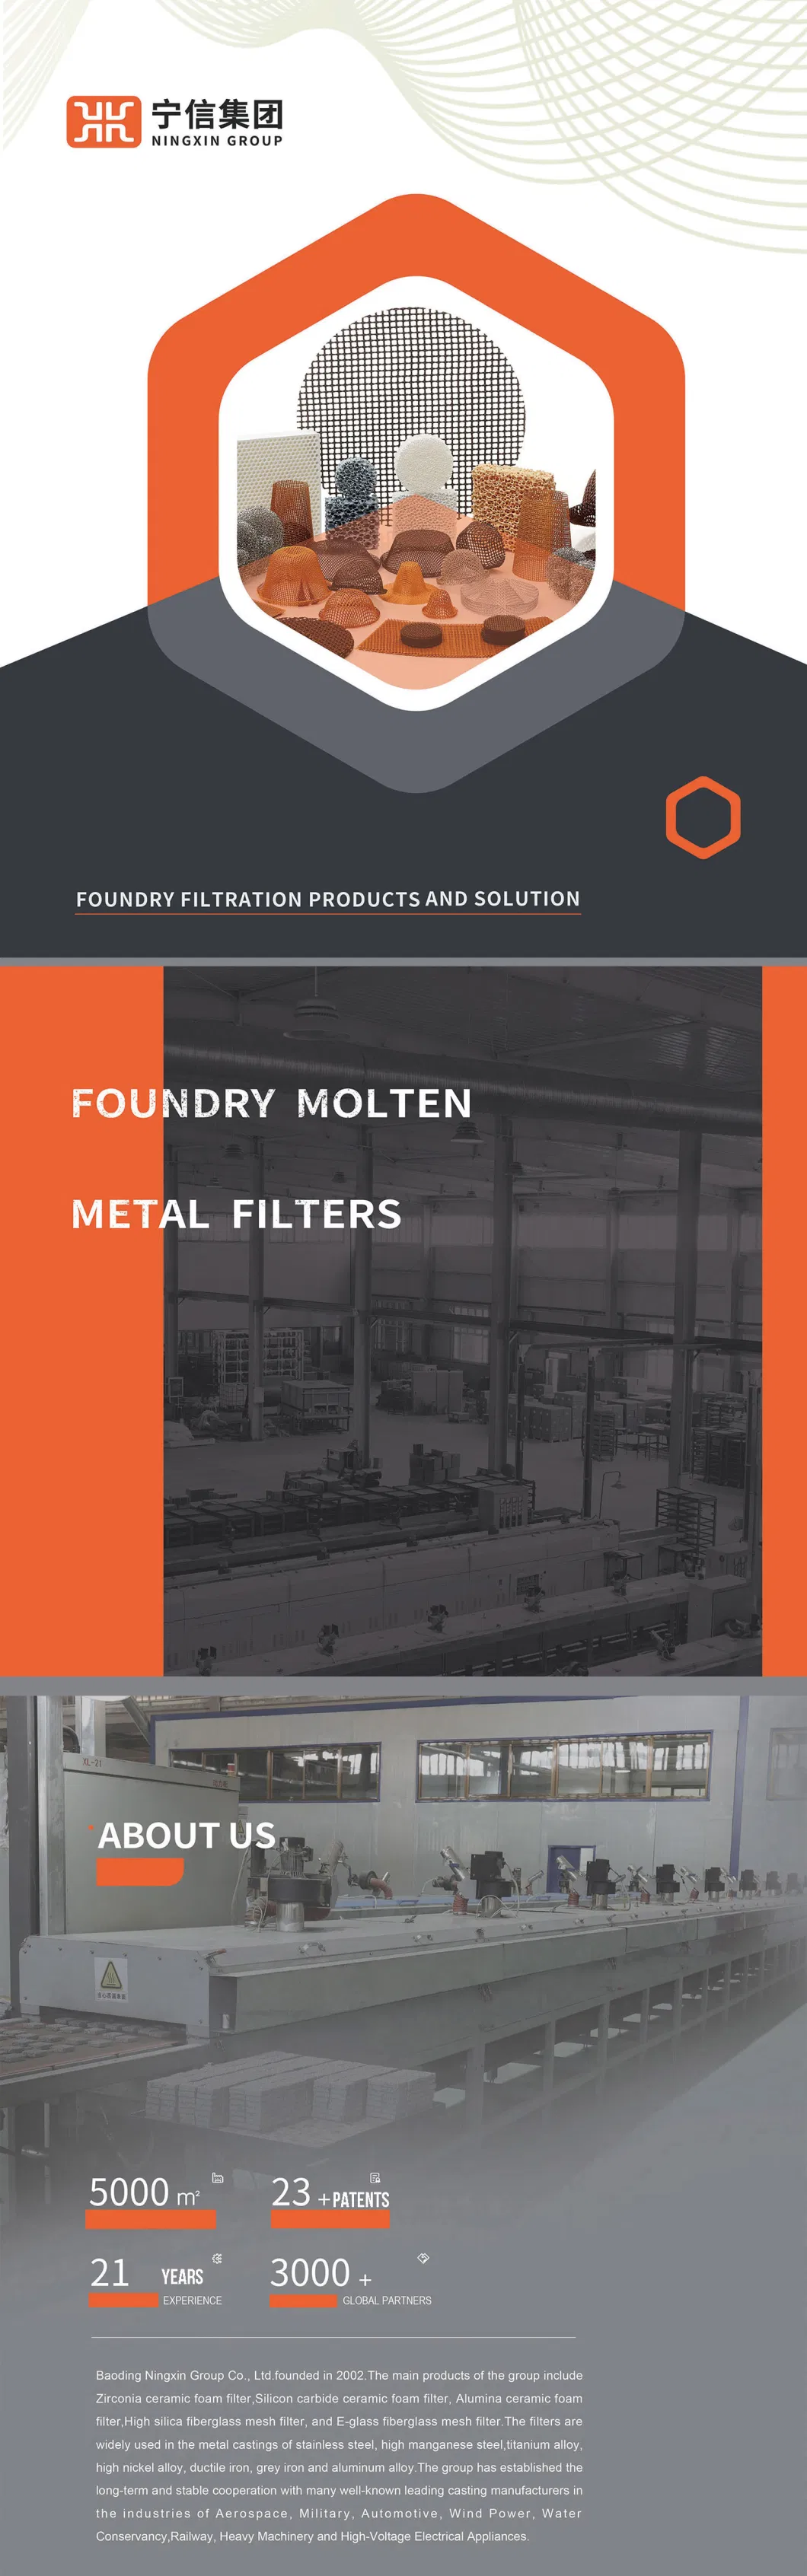 Melt Metal Filtration Sio2 Molded Precision Casting Low Carbon Steel Fiberglass Filter